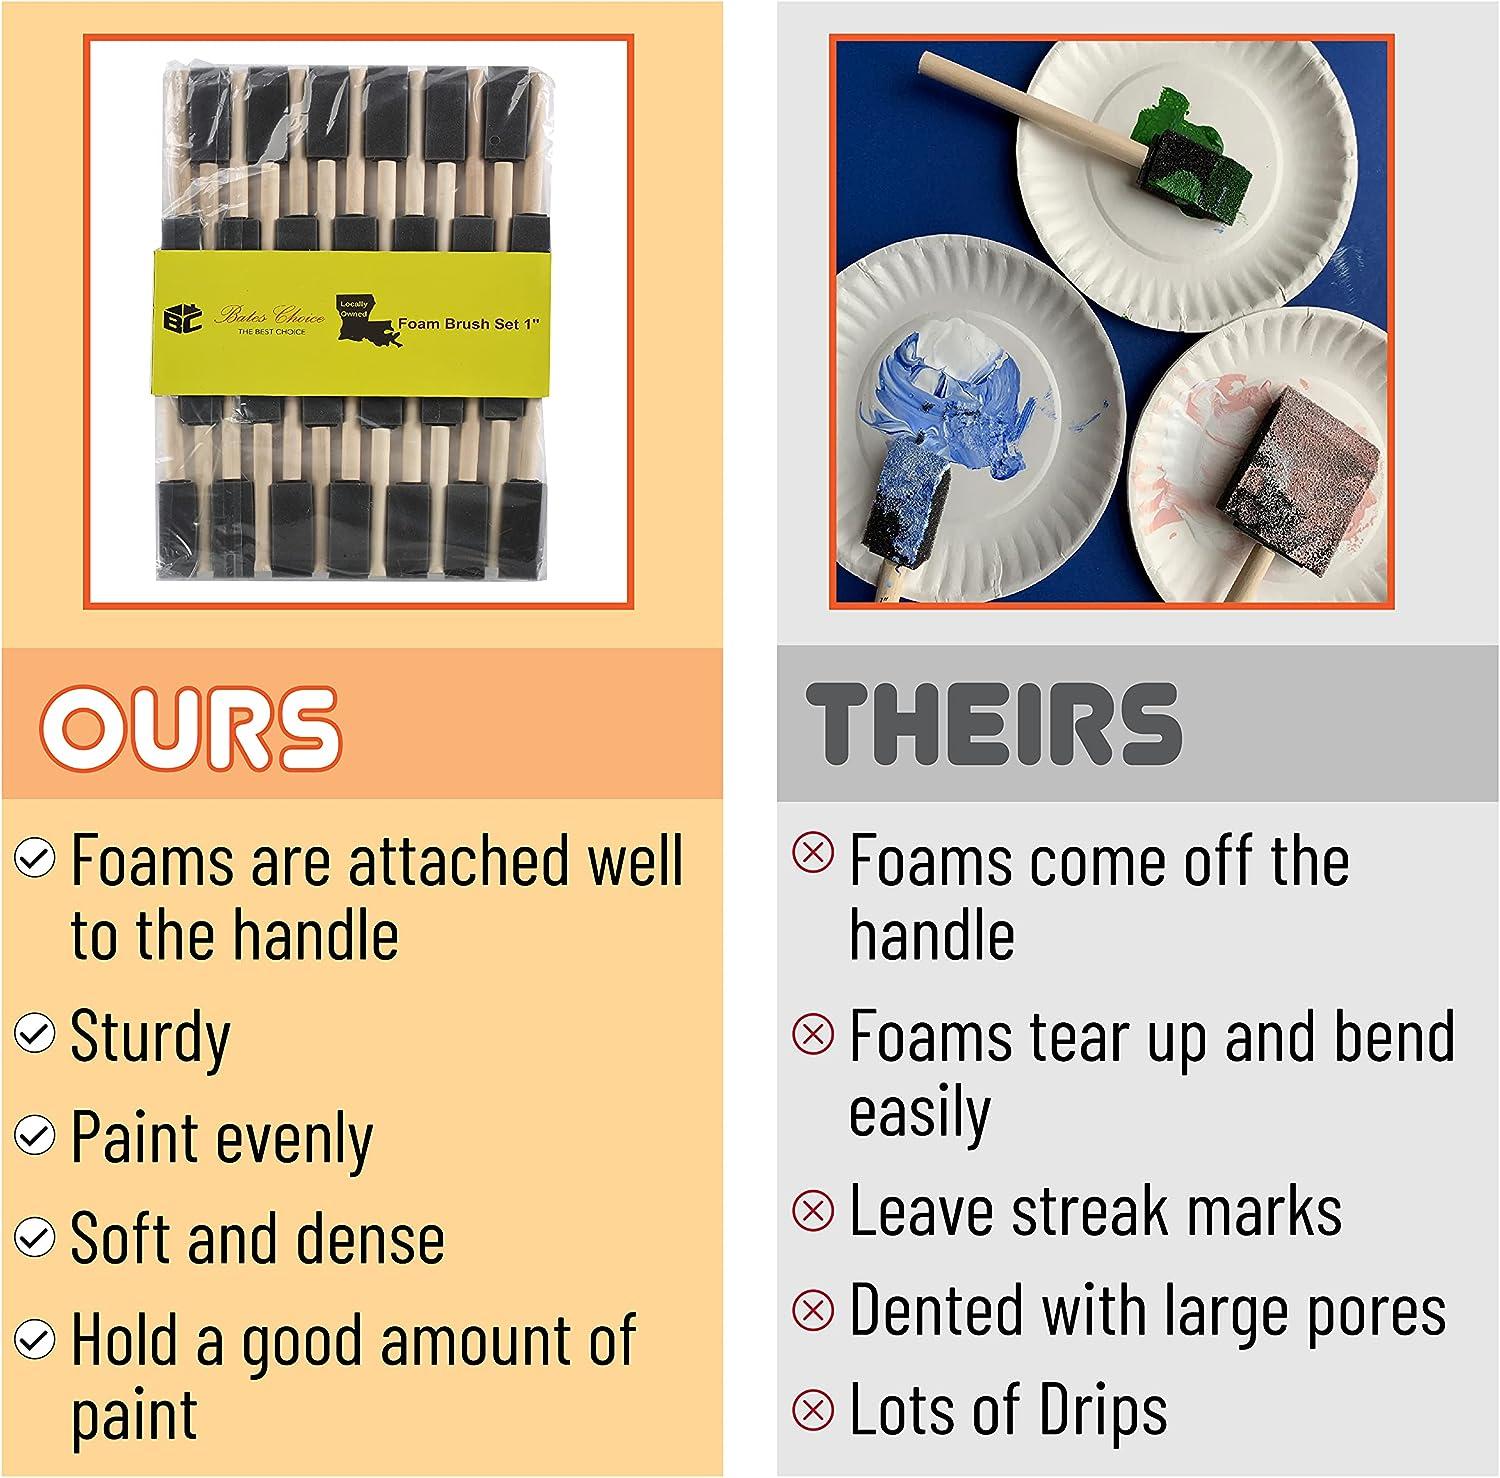 Bates- Foam Paint Brushes, 16pcs, 2 inch, Sponge Brushes, Sponge Paint Brush, Foam Brushes, Foam Brushes for Painting, Foam Brushes for Staining